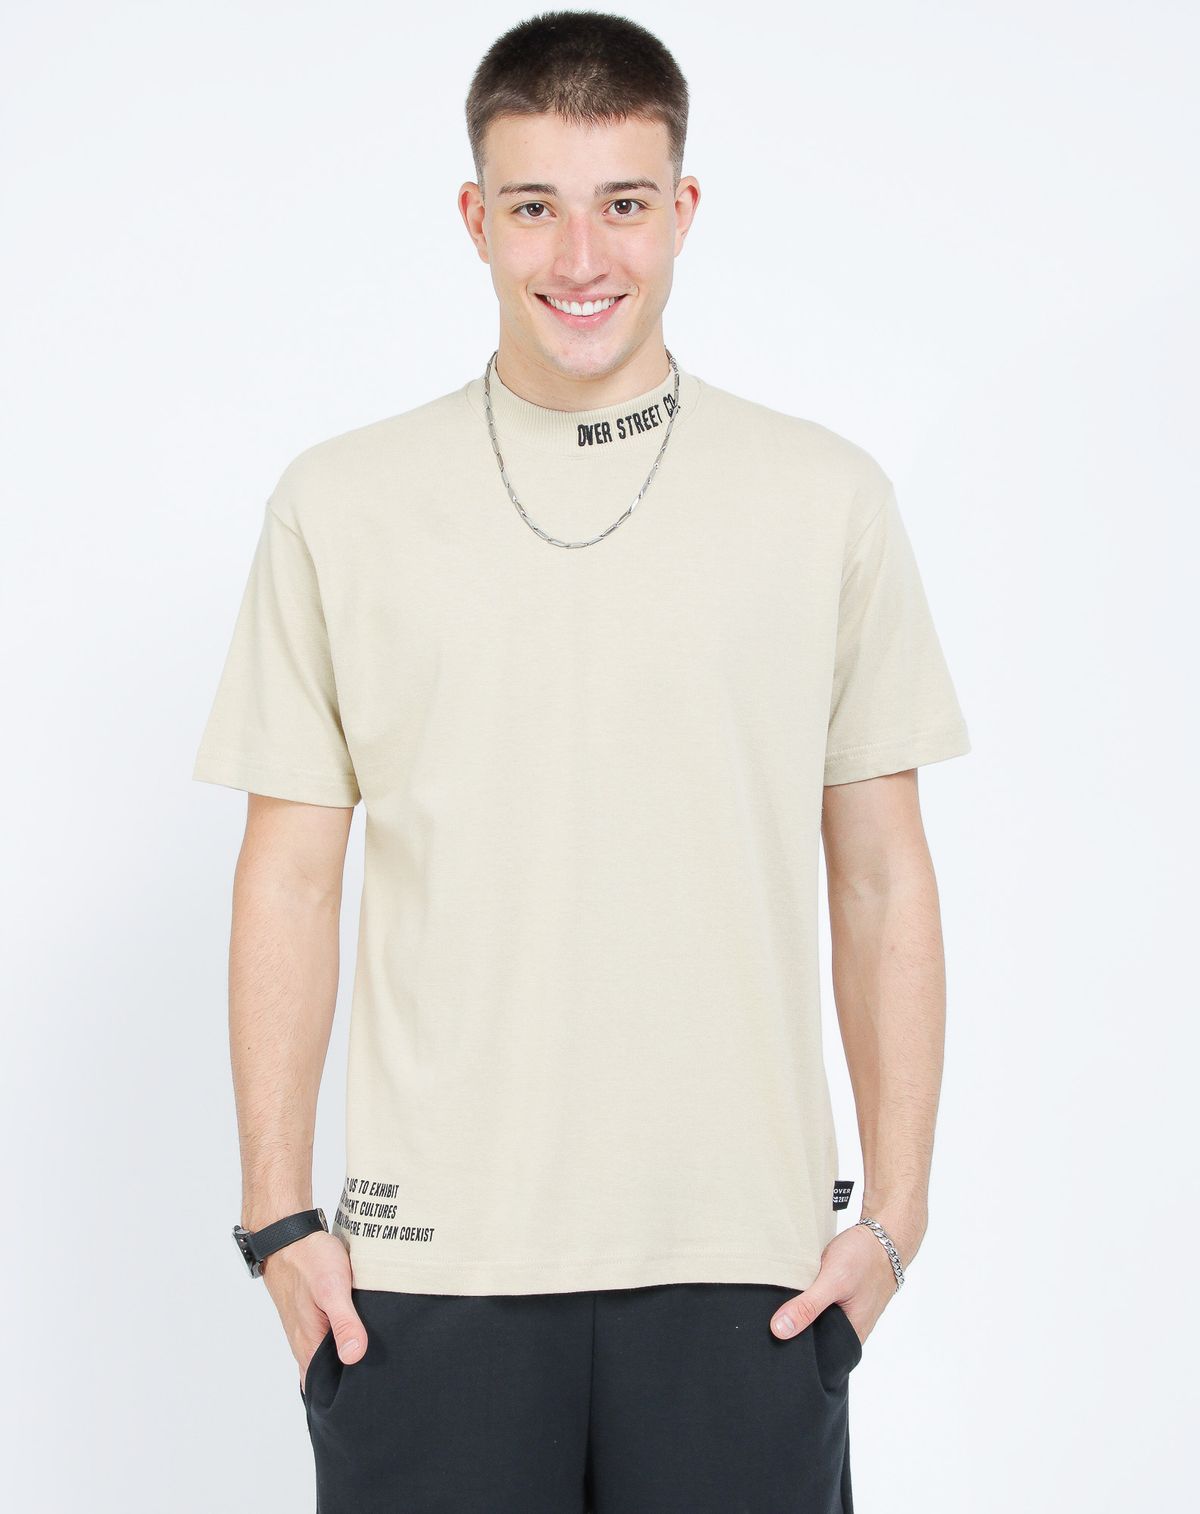 684121003-camiseta-manga-curta-masculina-gola-lettering-bege-g-d40